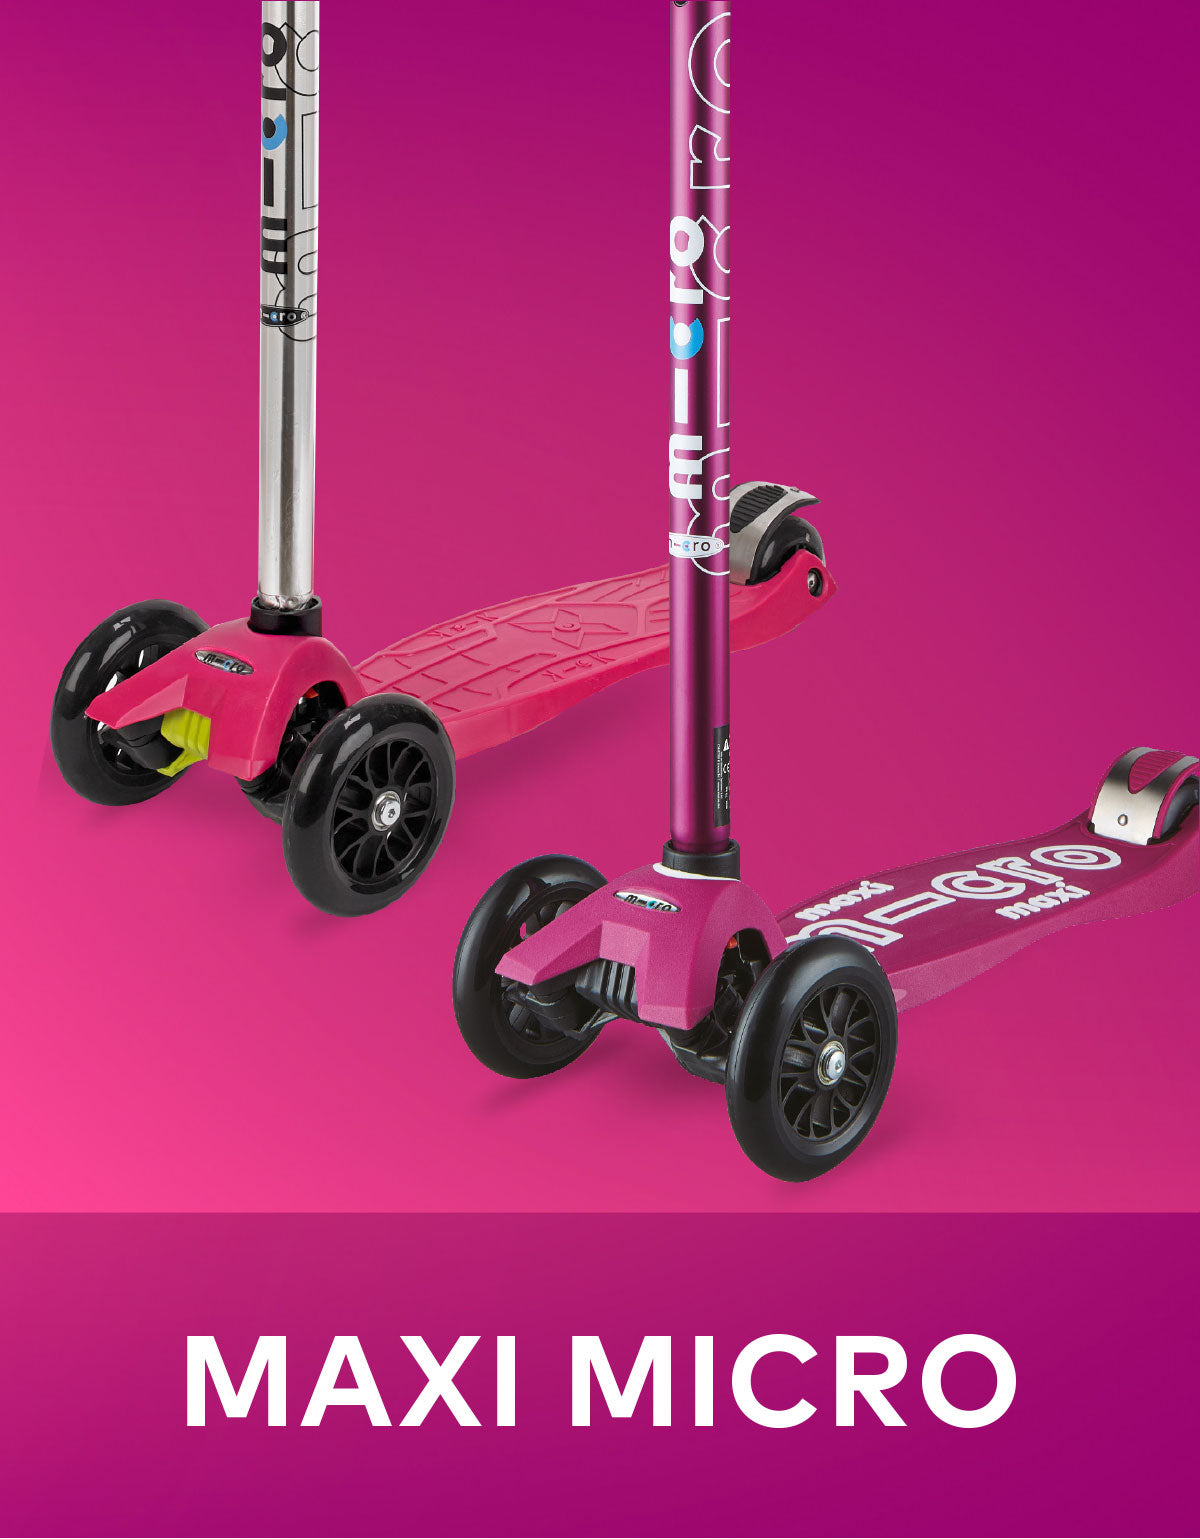 Maxi Micro Scooter Repair Videos